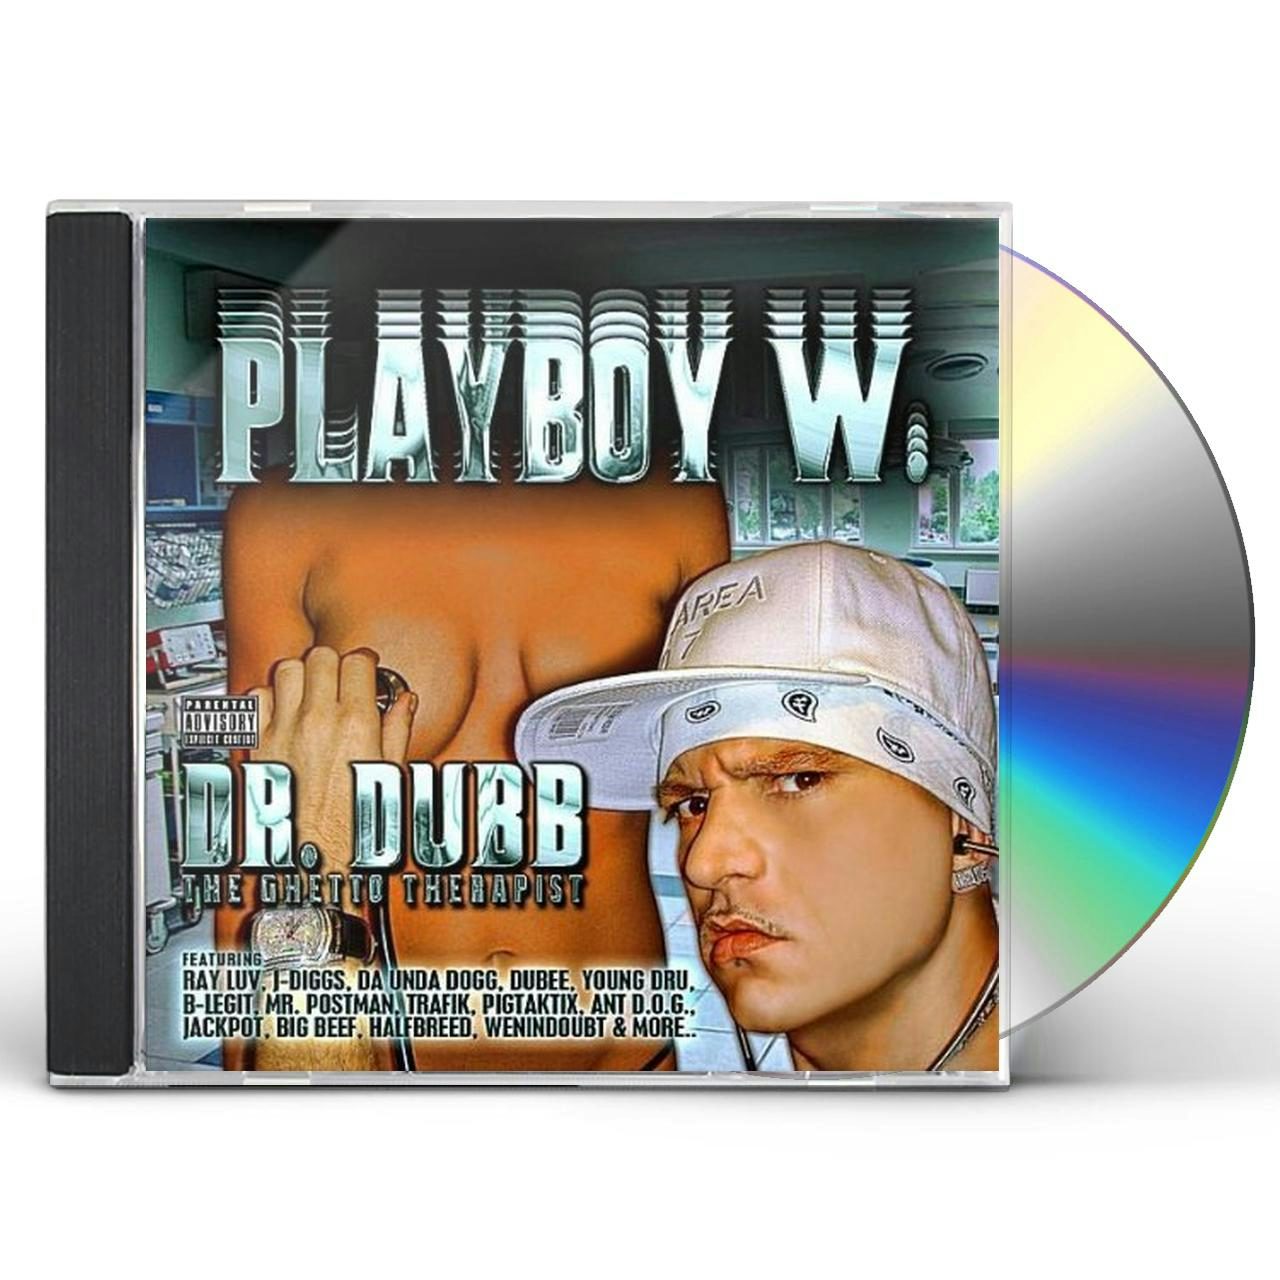 Playboy W. DR. DUBB CD